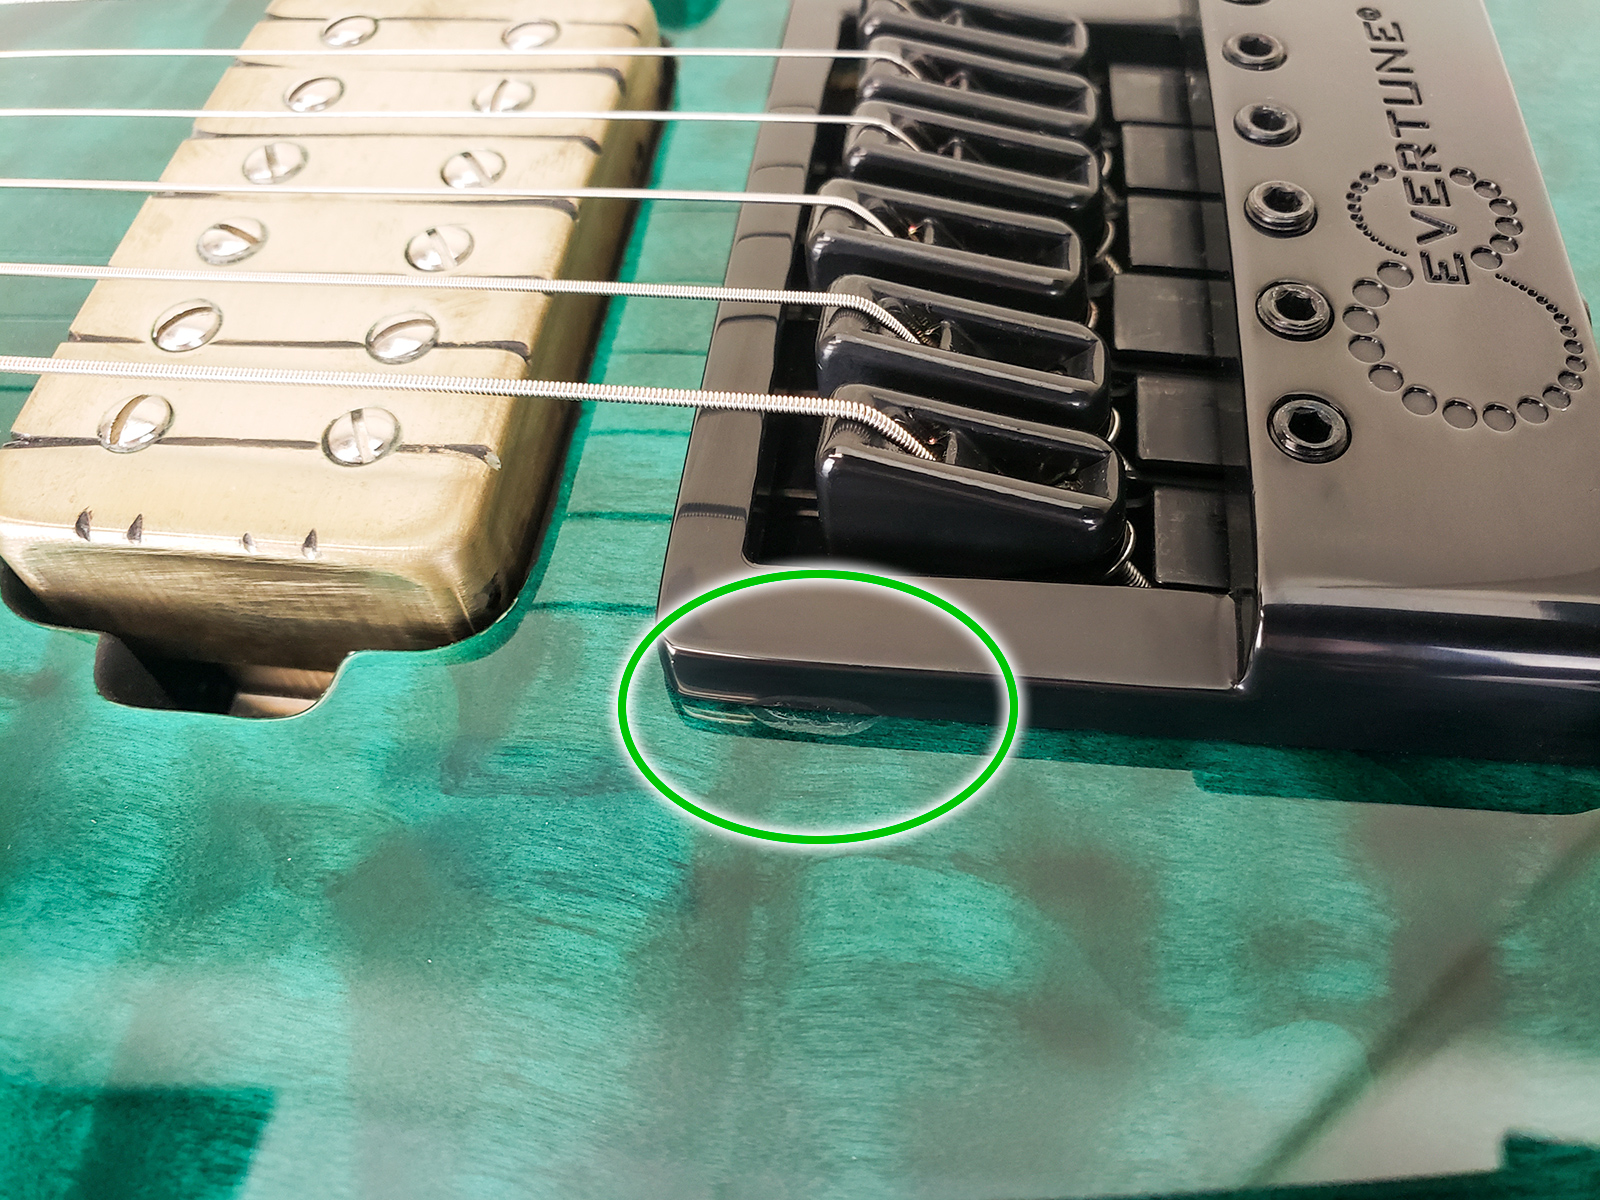 small chip under bridge faceplate - REPAIRED